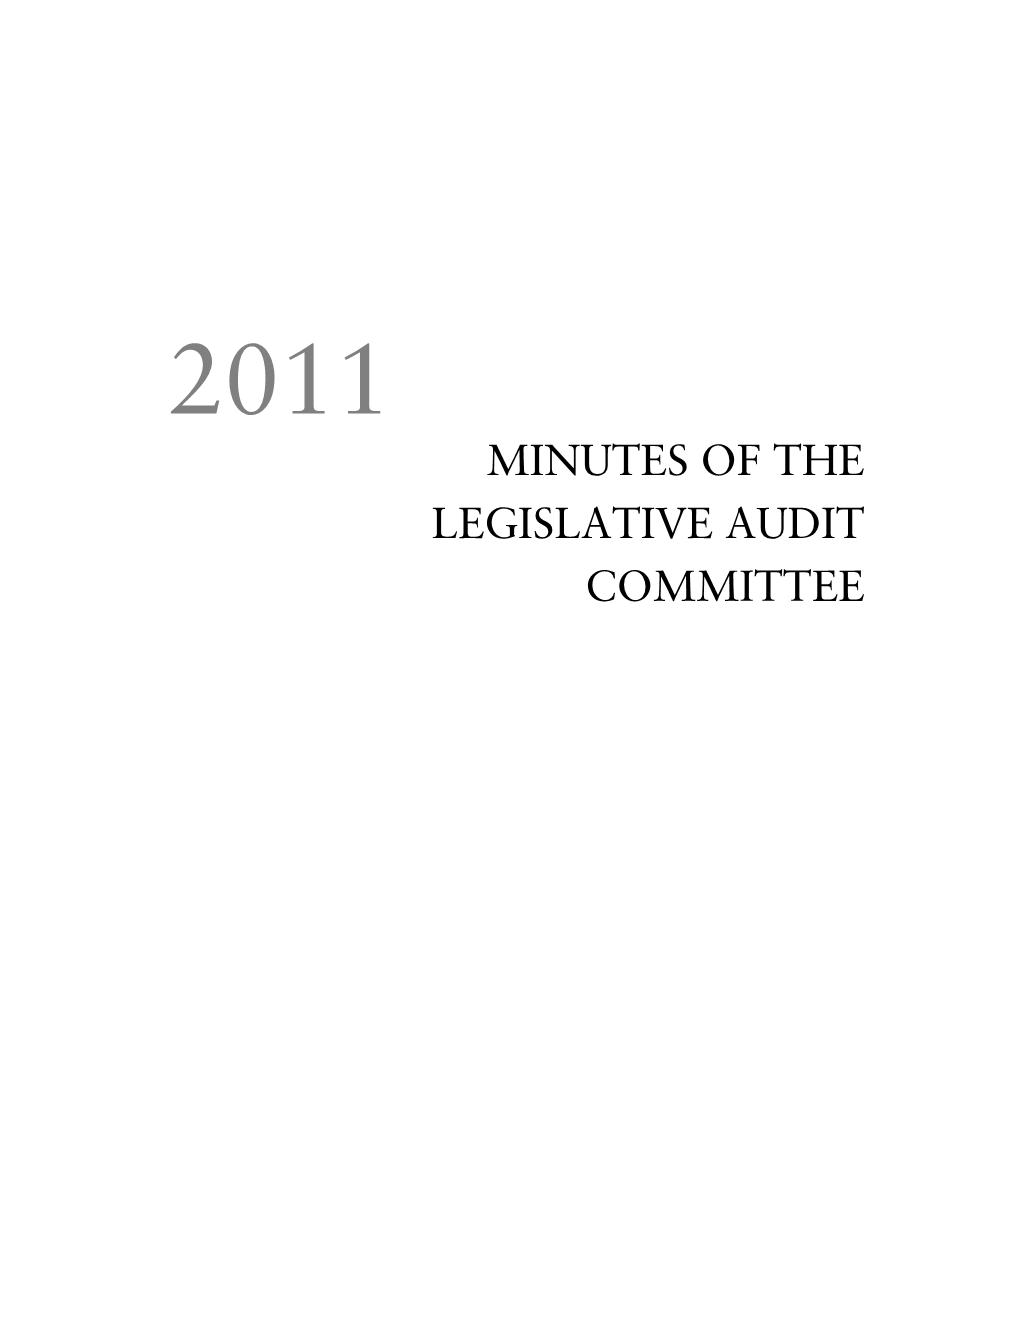 Minutes of the Legislative Audit Committee